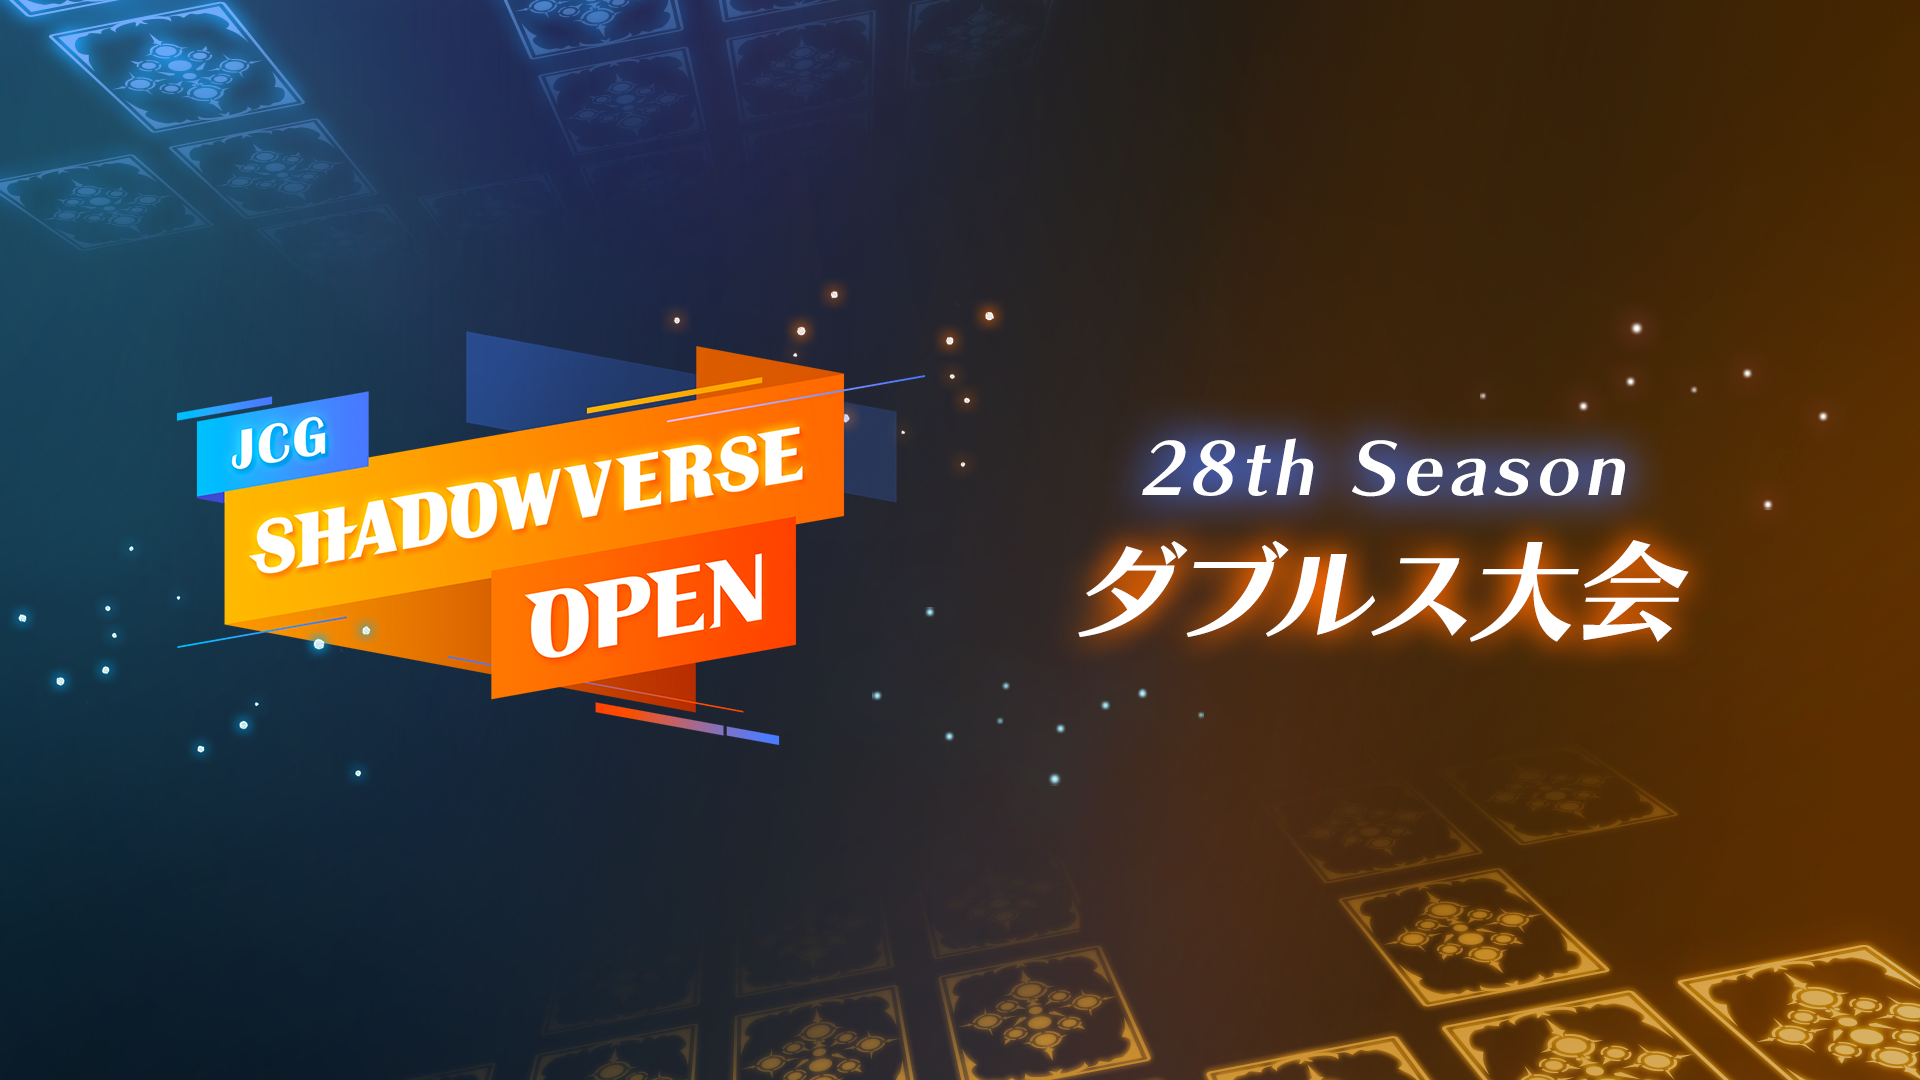 JCG Shadowverse Open 28th Season ダブルス大会 結果速報